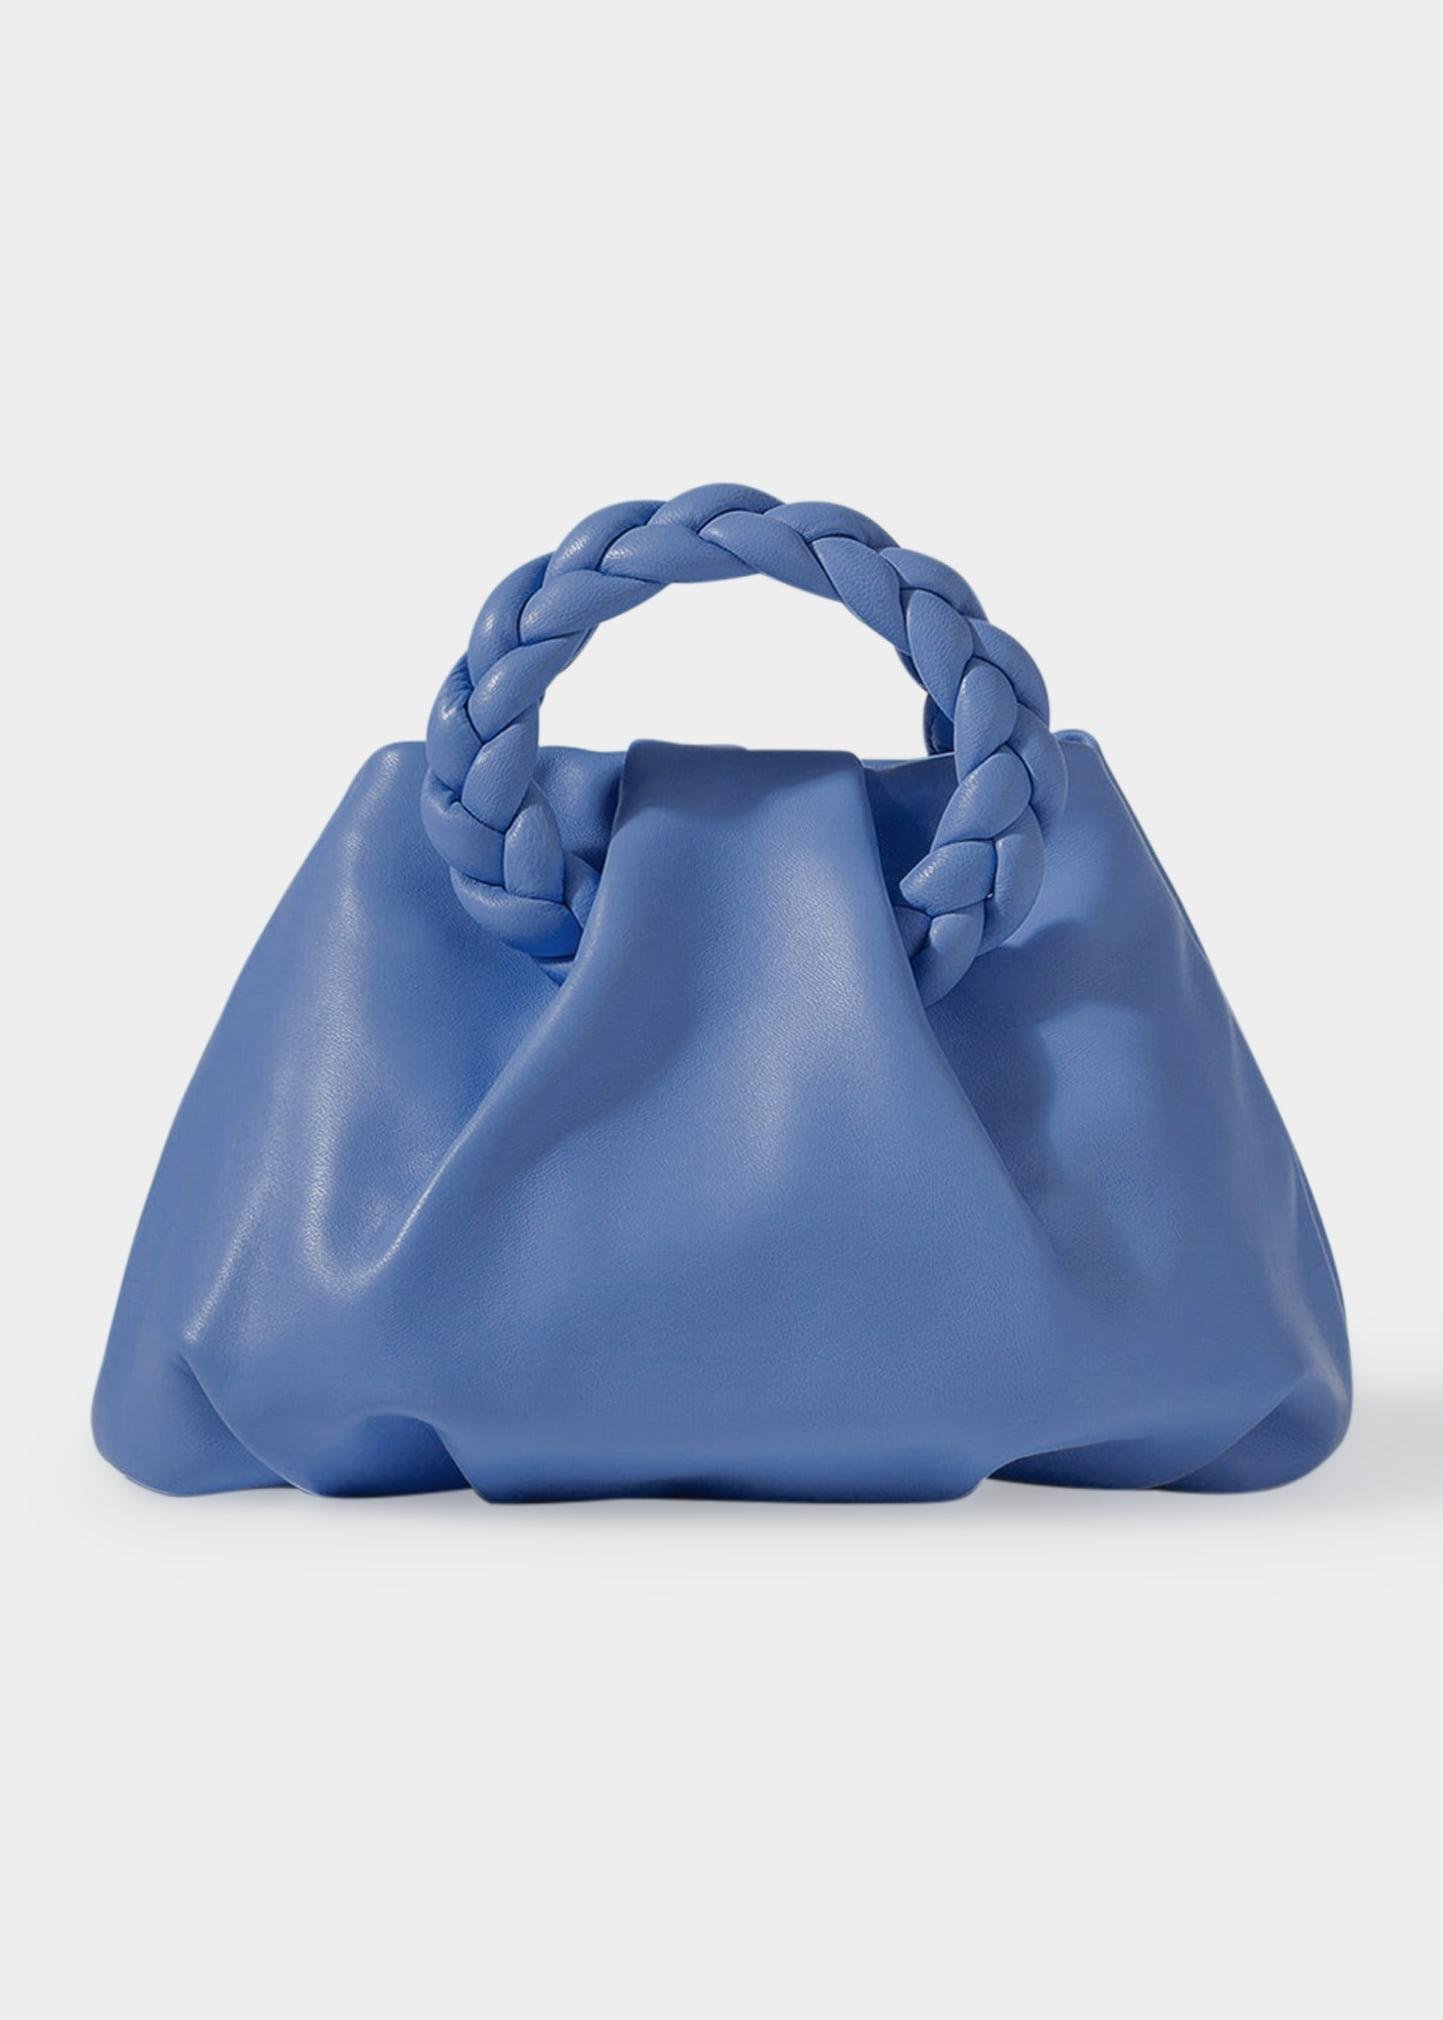 Hereu Bombon Braided Leather Top-handle Bag In Cream